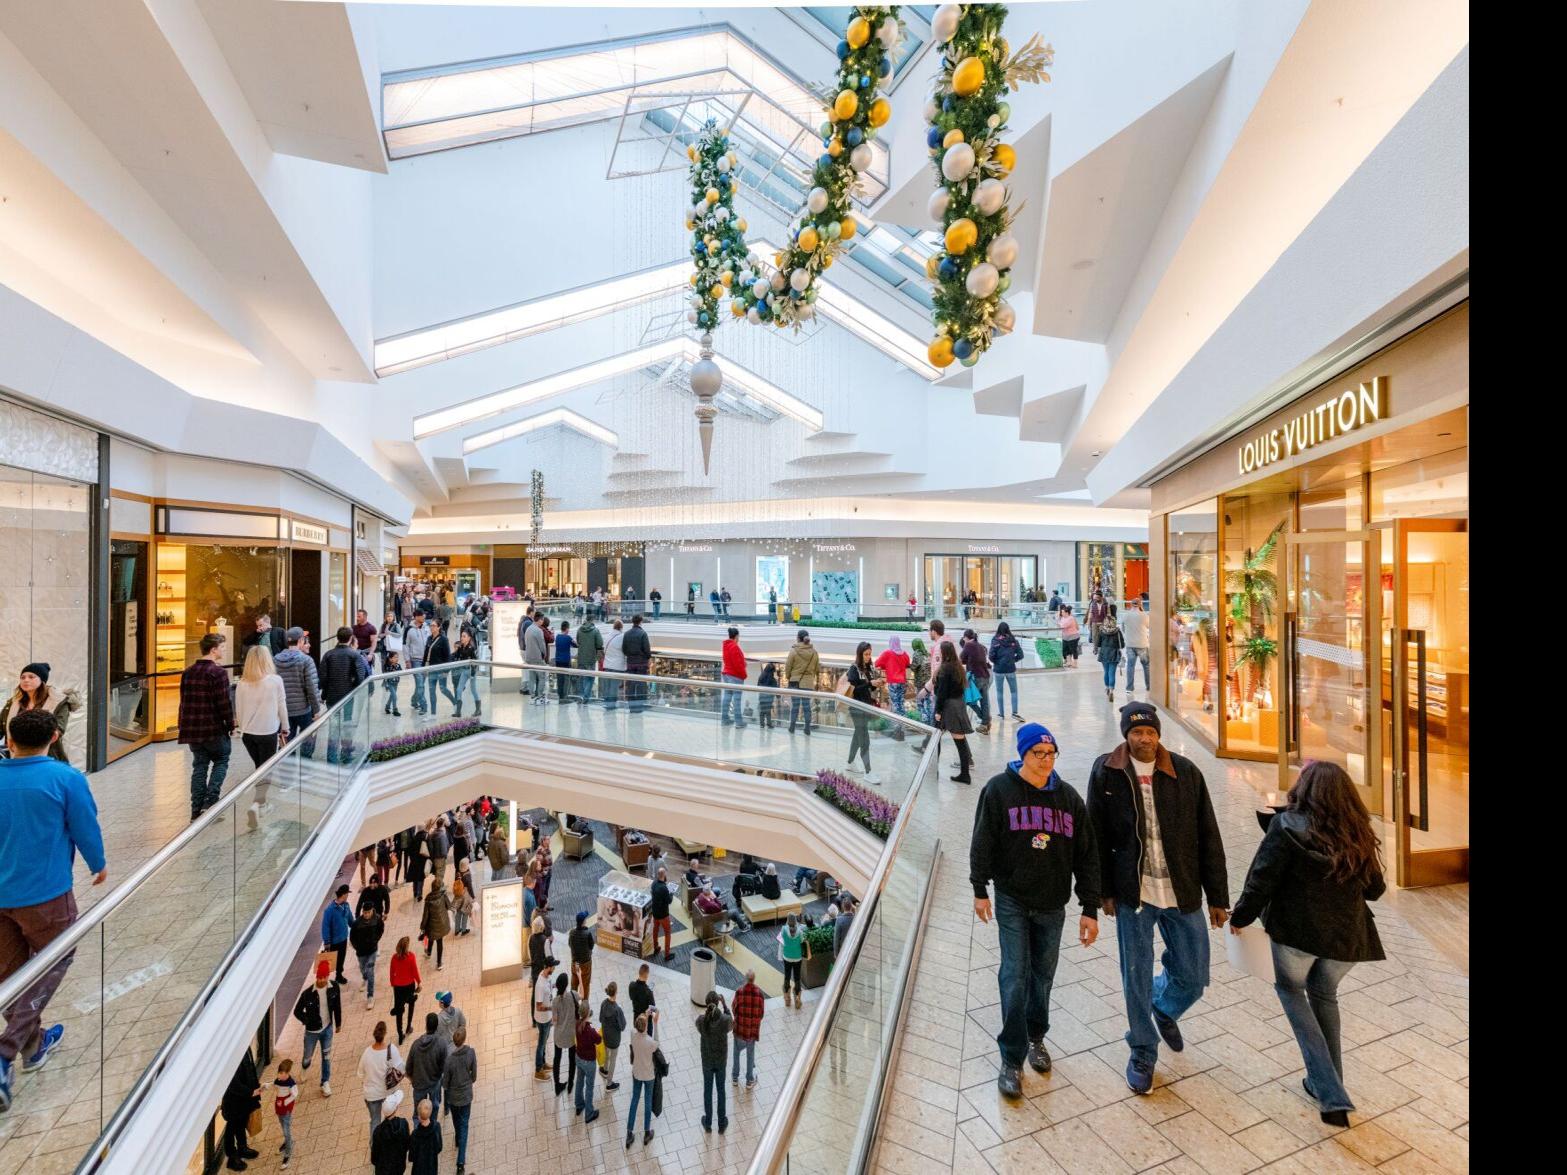 Denver shopping centers expect strong Black Friday